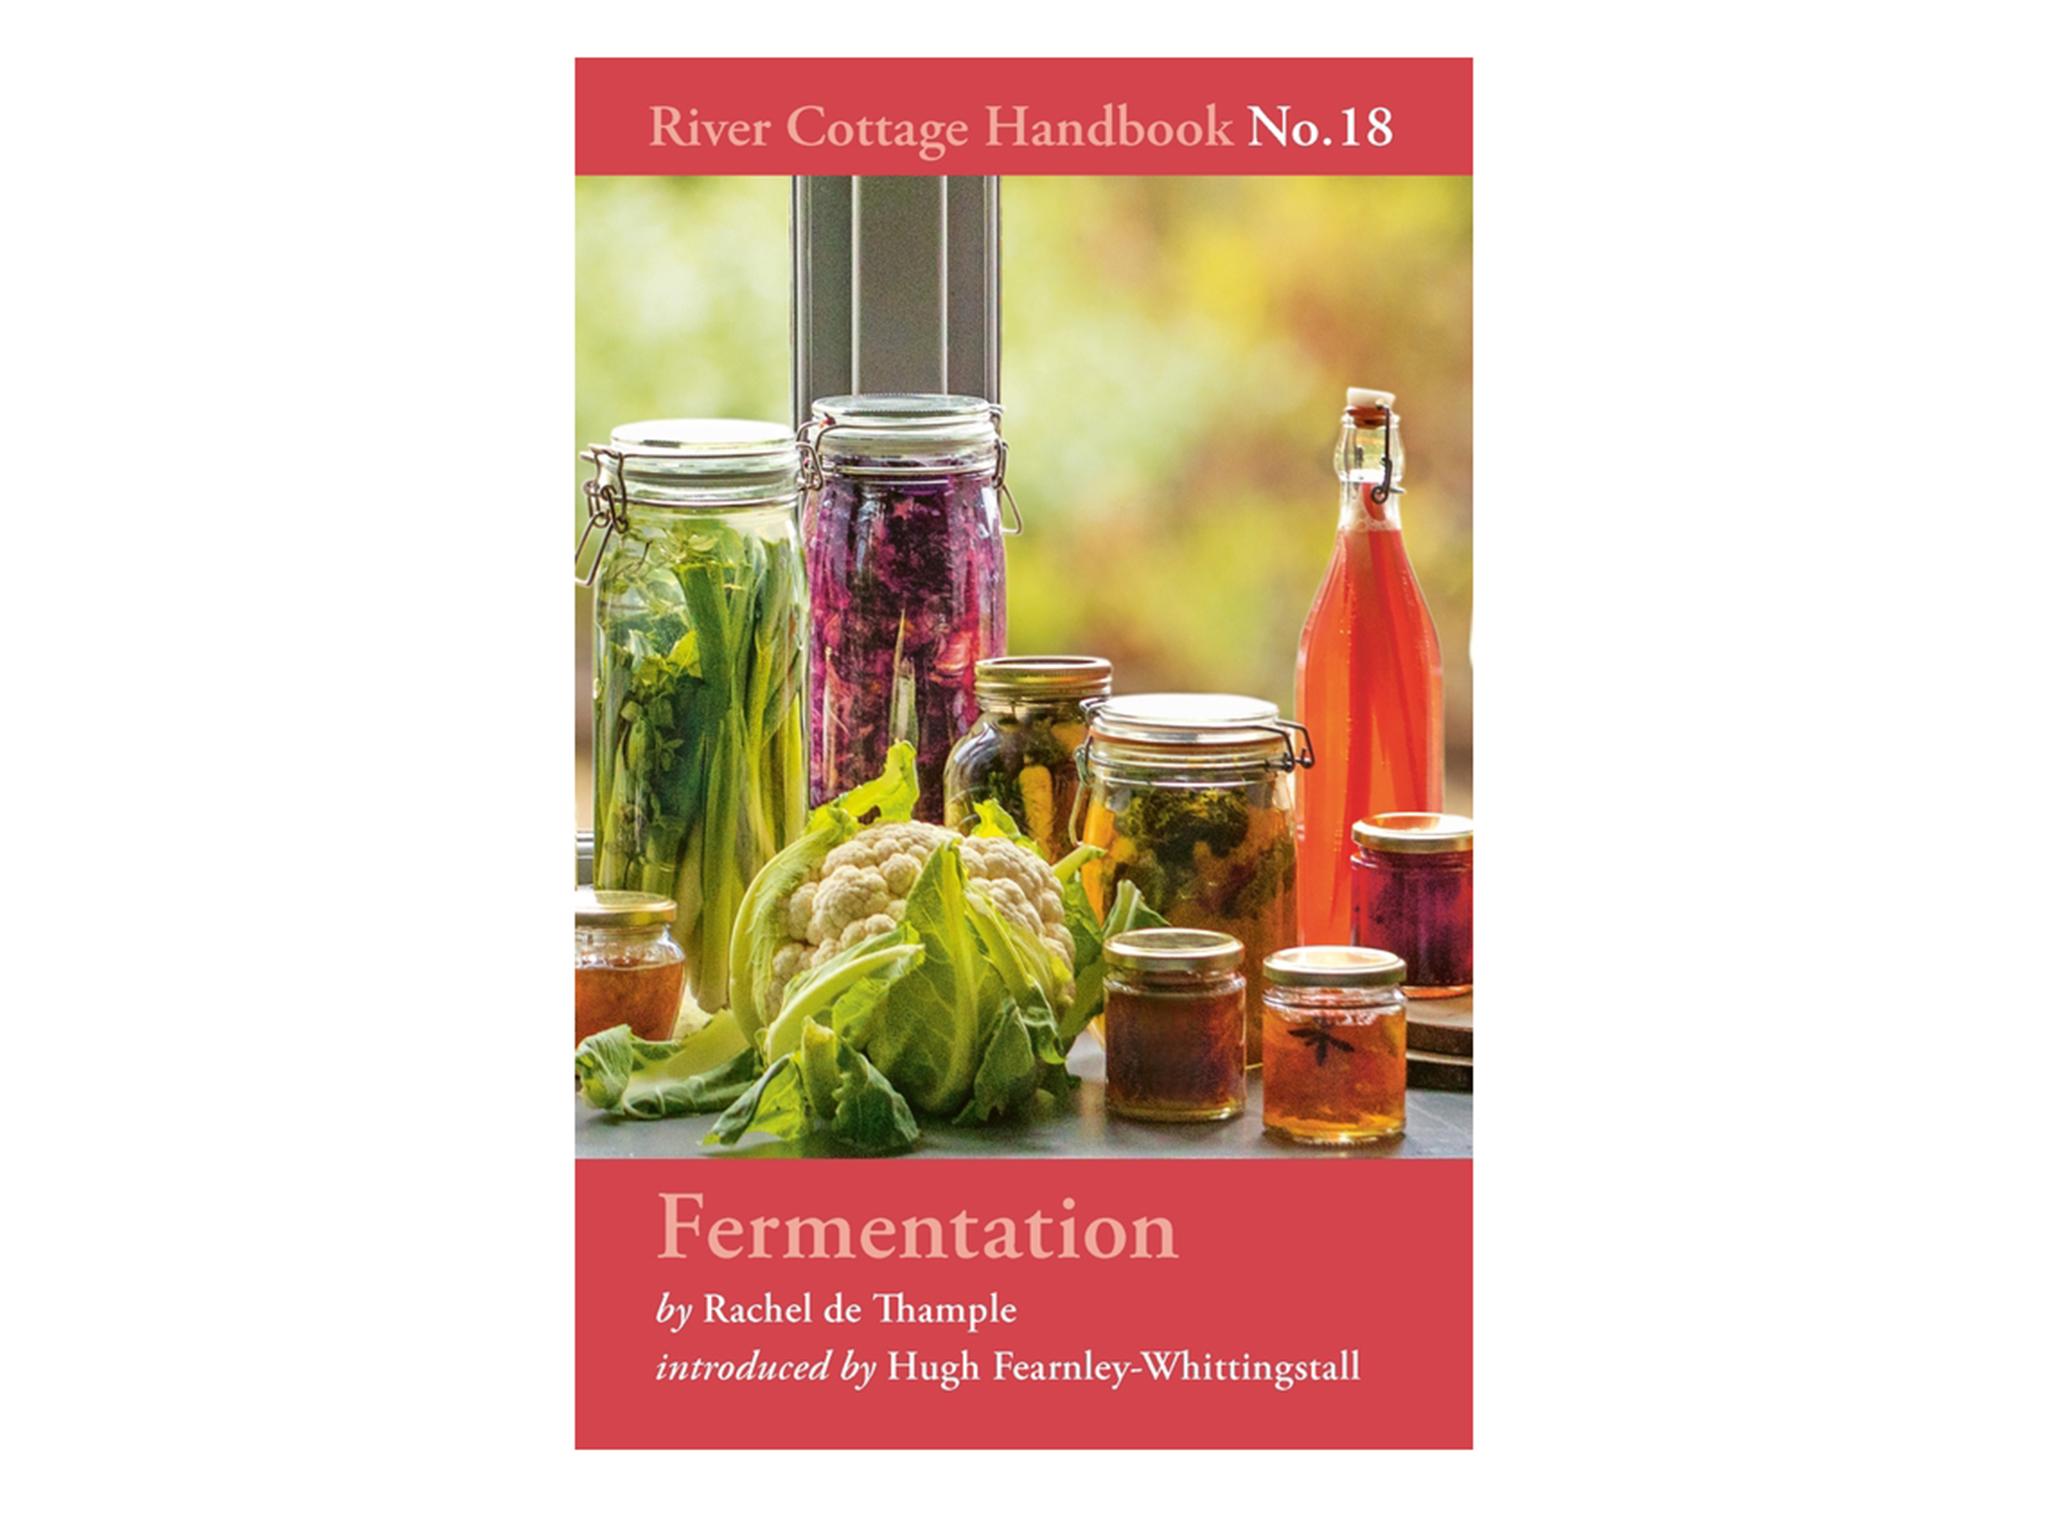 indybest best fermentation book fermentation-river-cottage-by-rachel-de-thample-indybest-best-fermentation-book.jpg